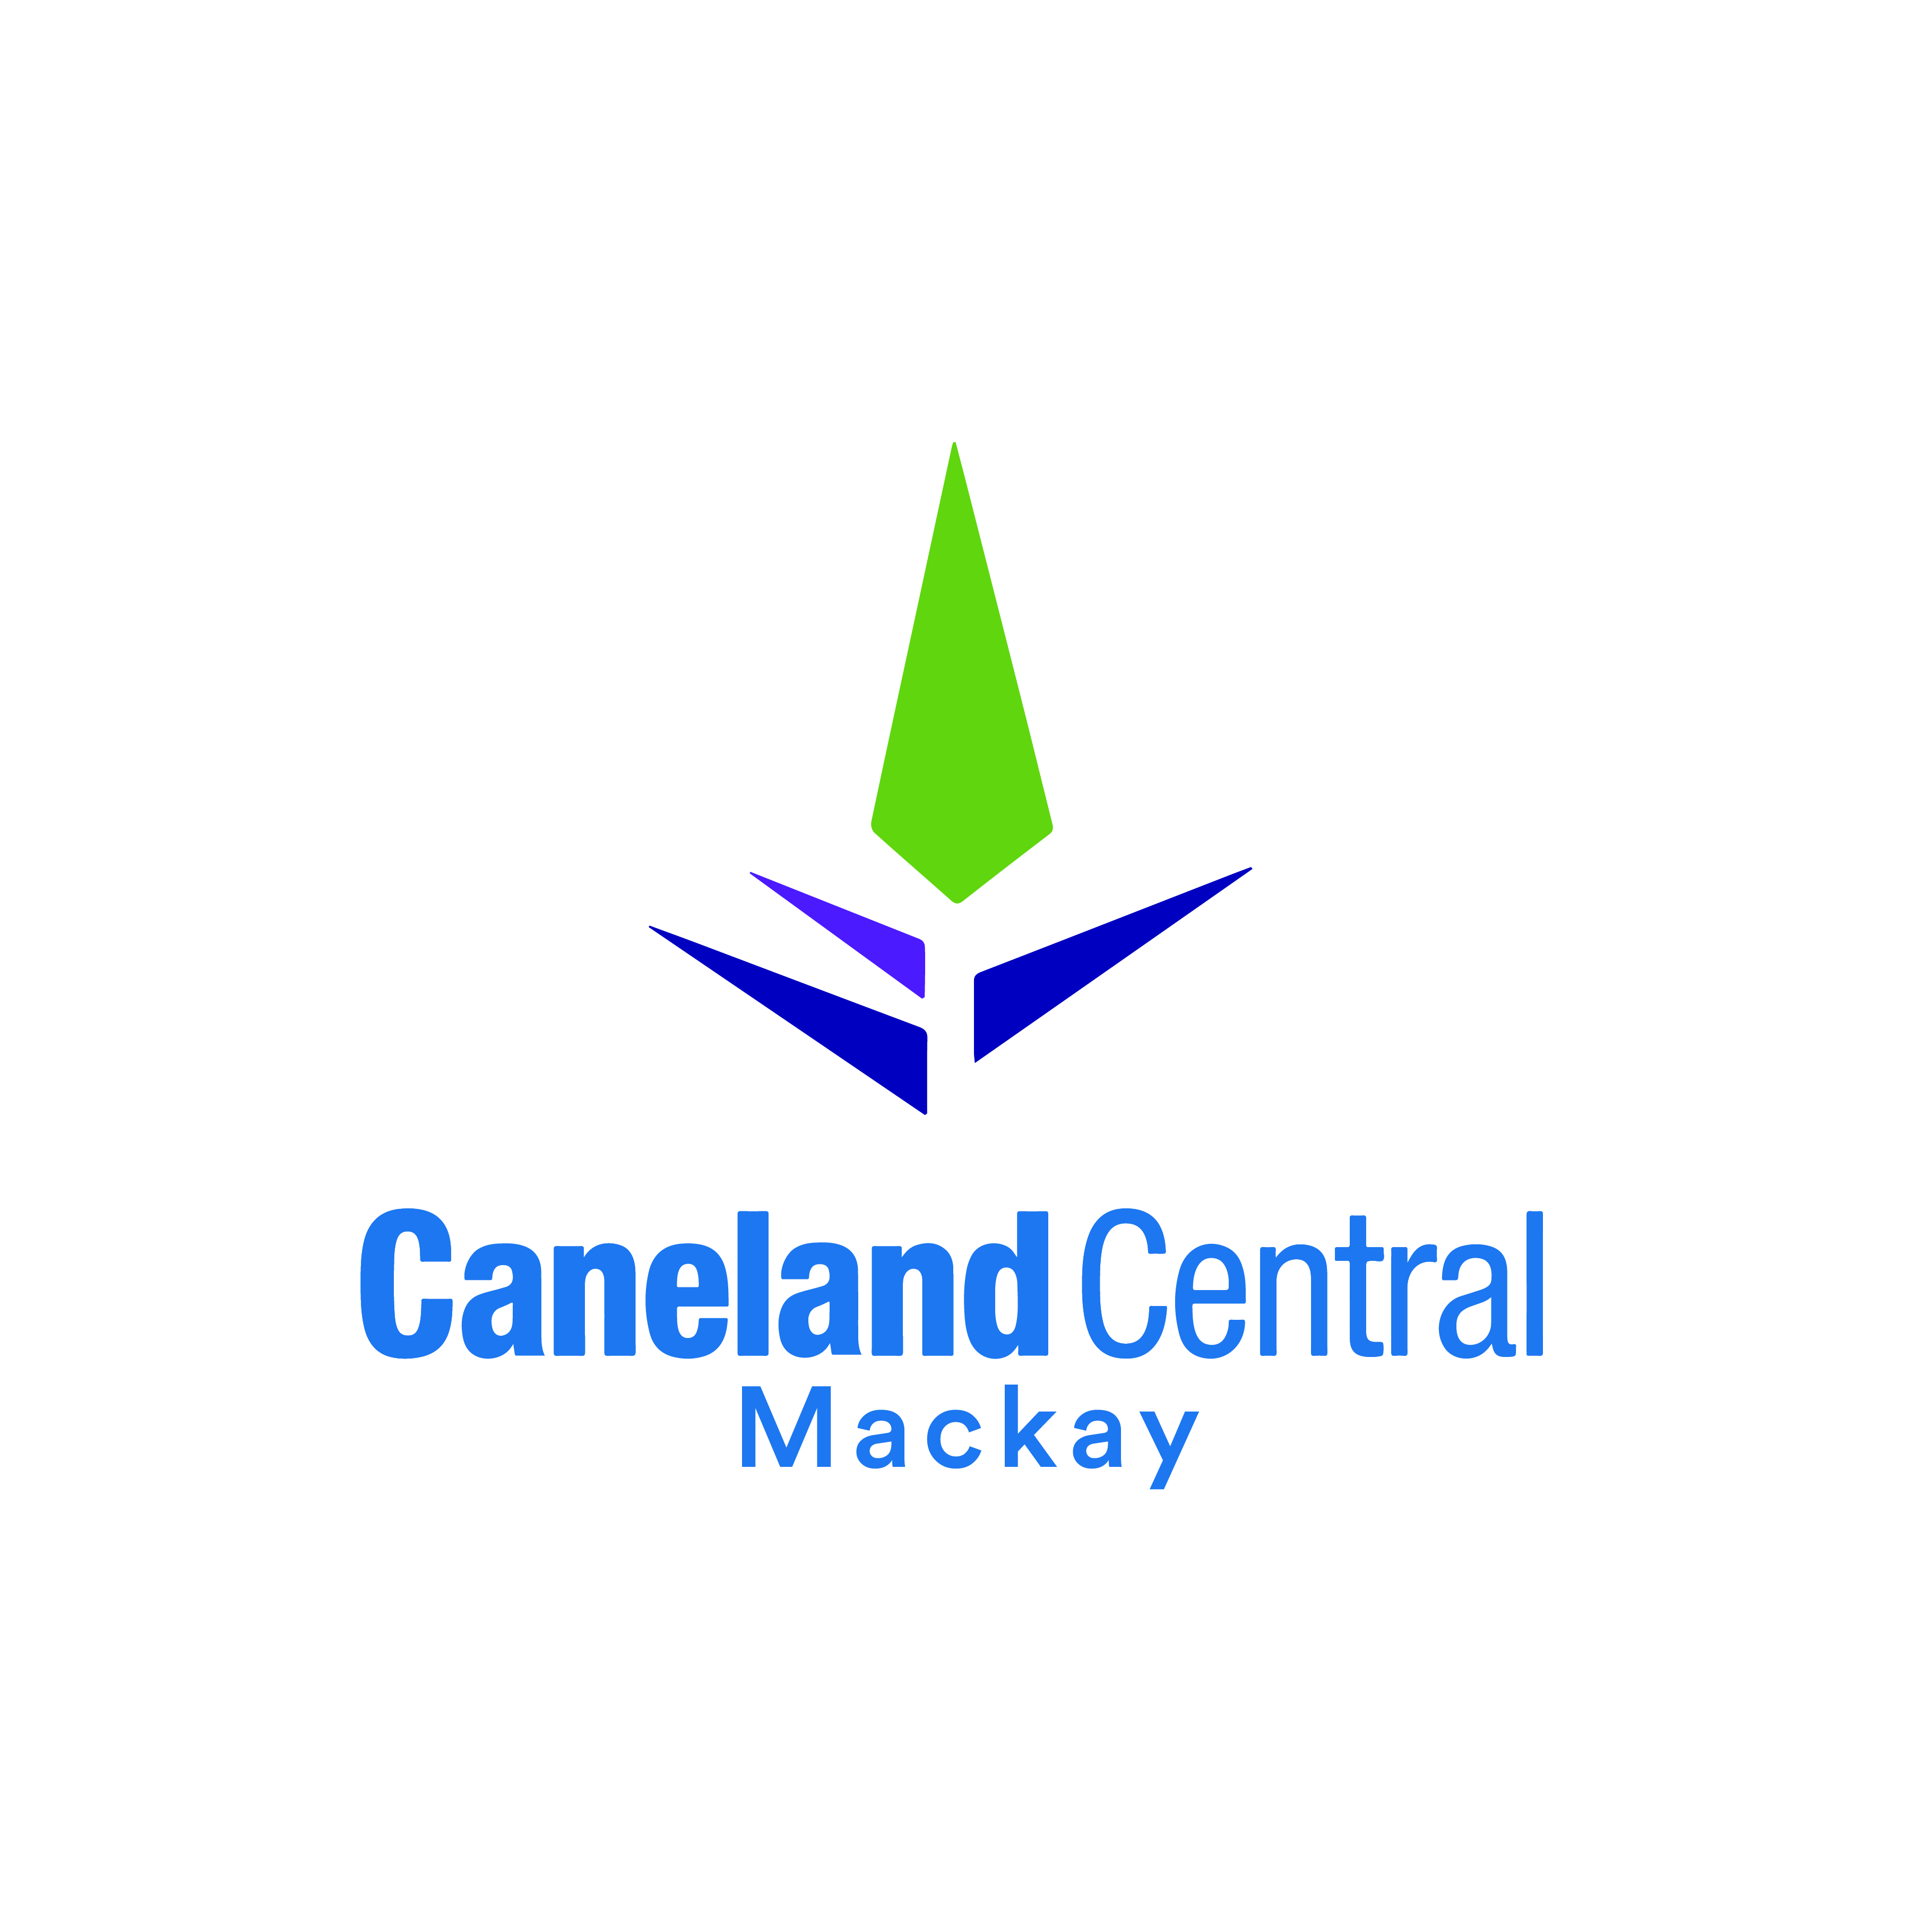 Caneland Central, Mackay